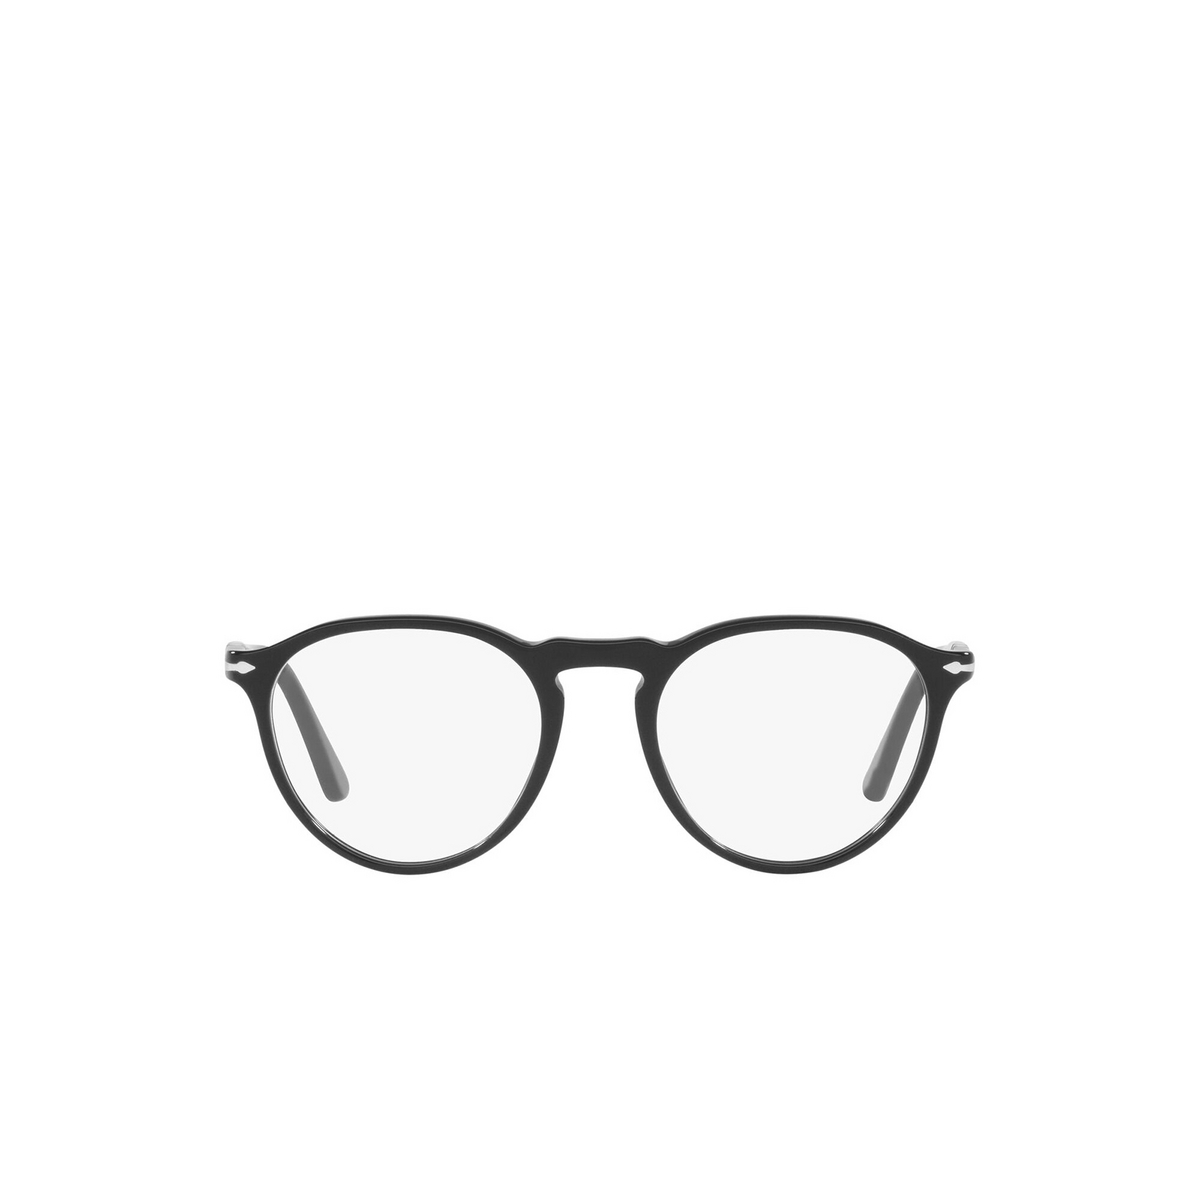 Persol® Round Eyeglasses: PO3286V color 95 Black - front view